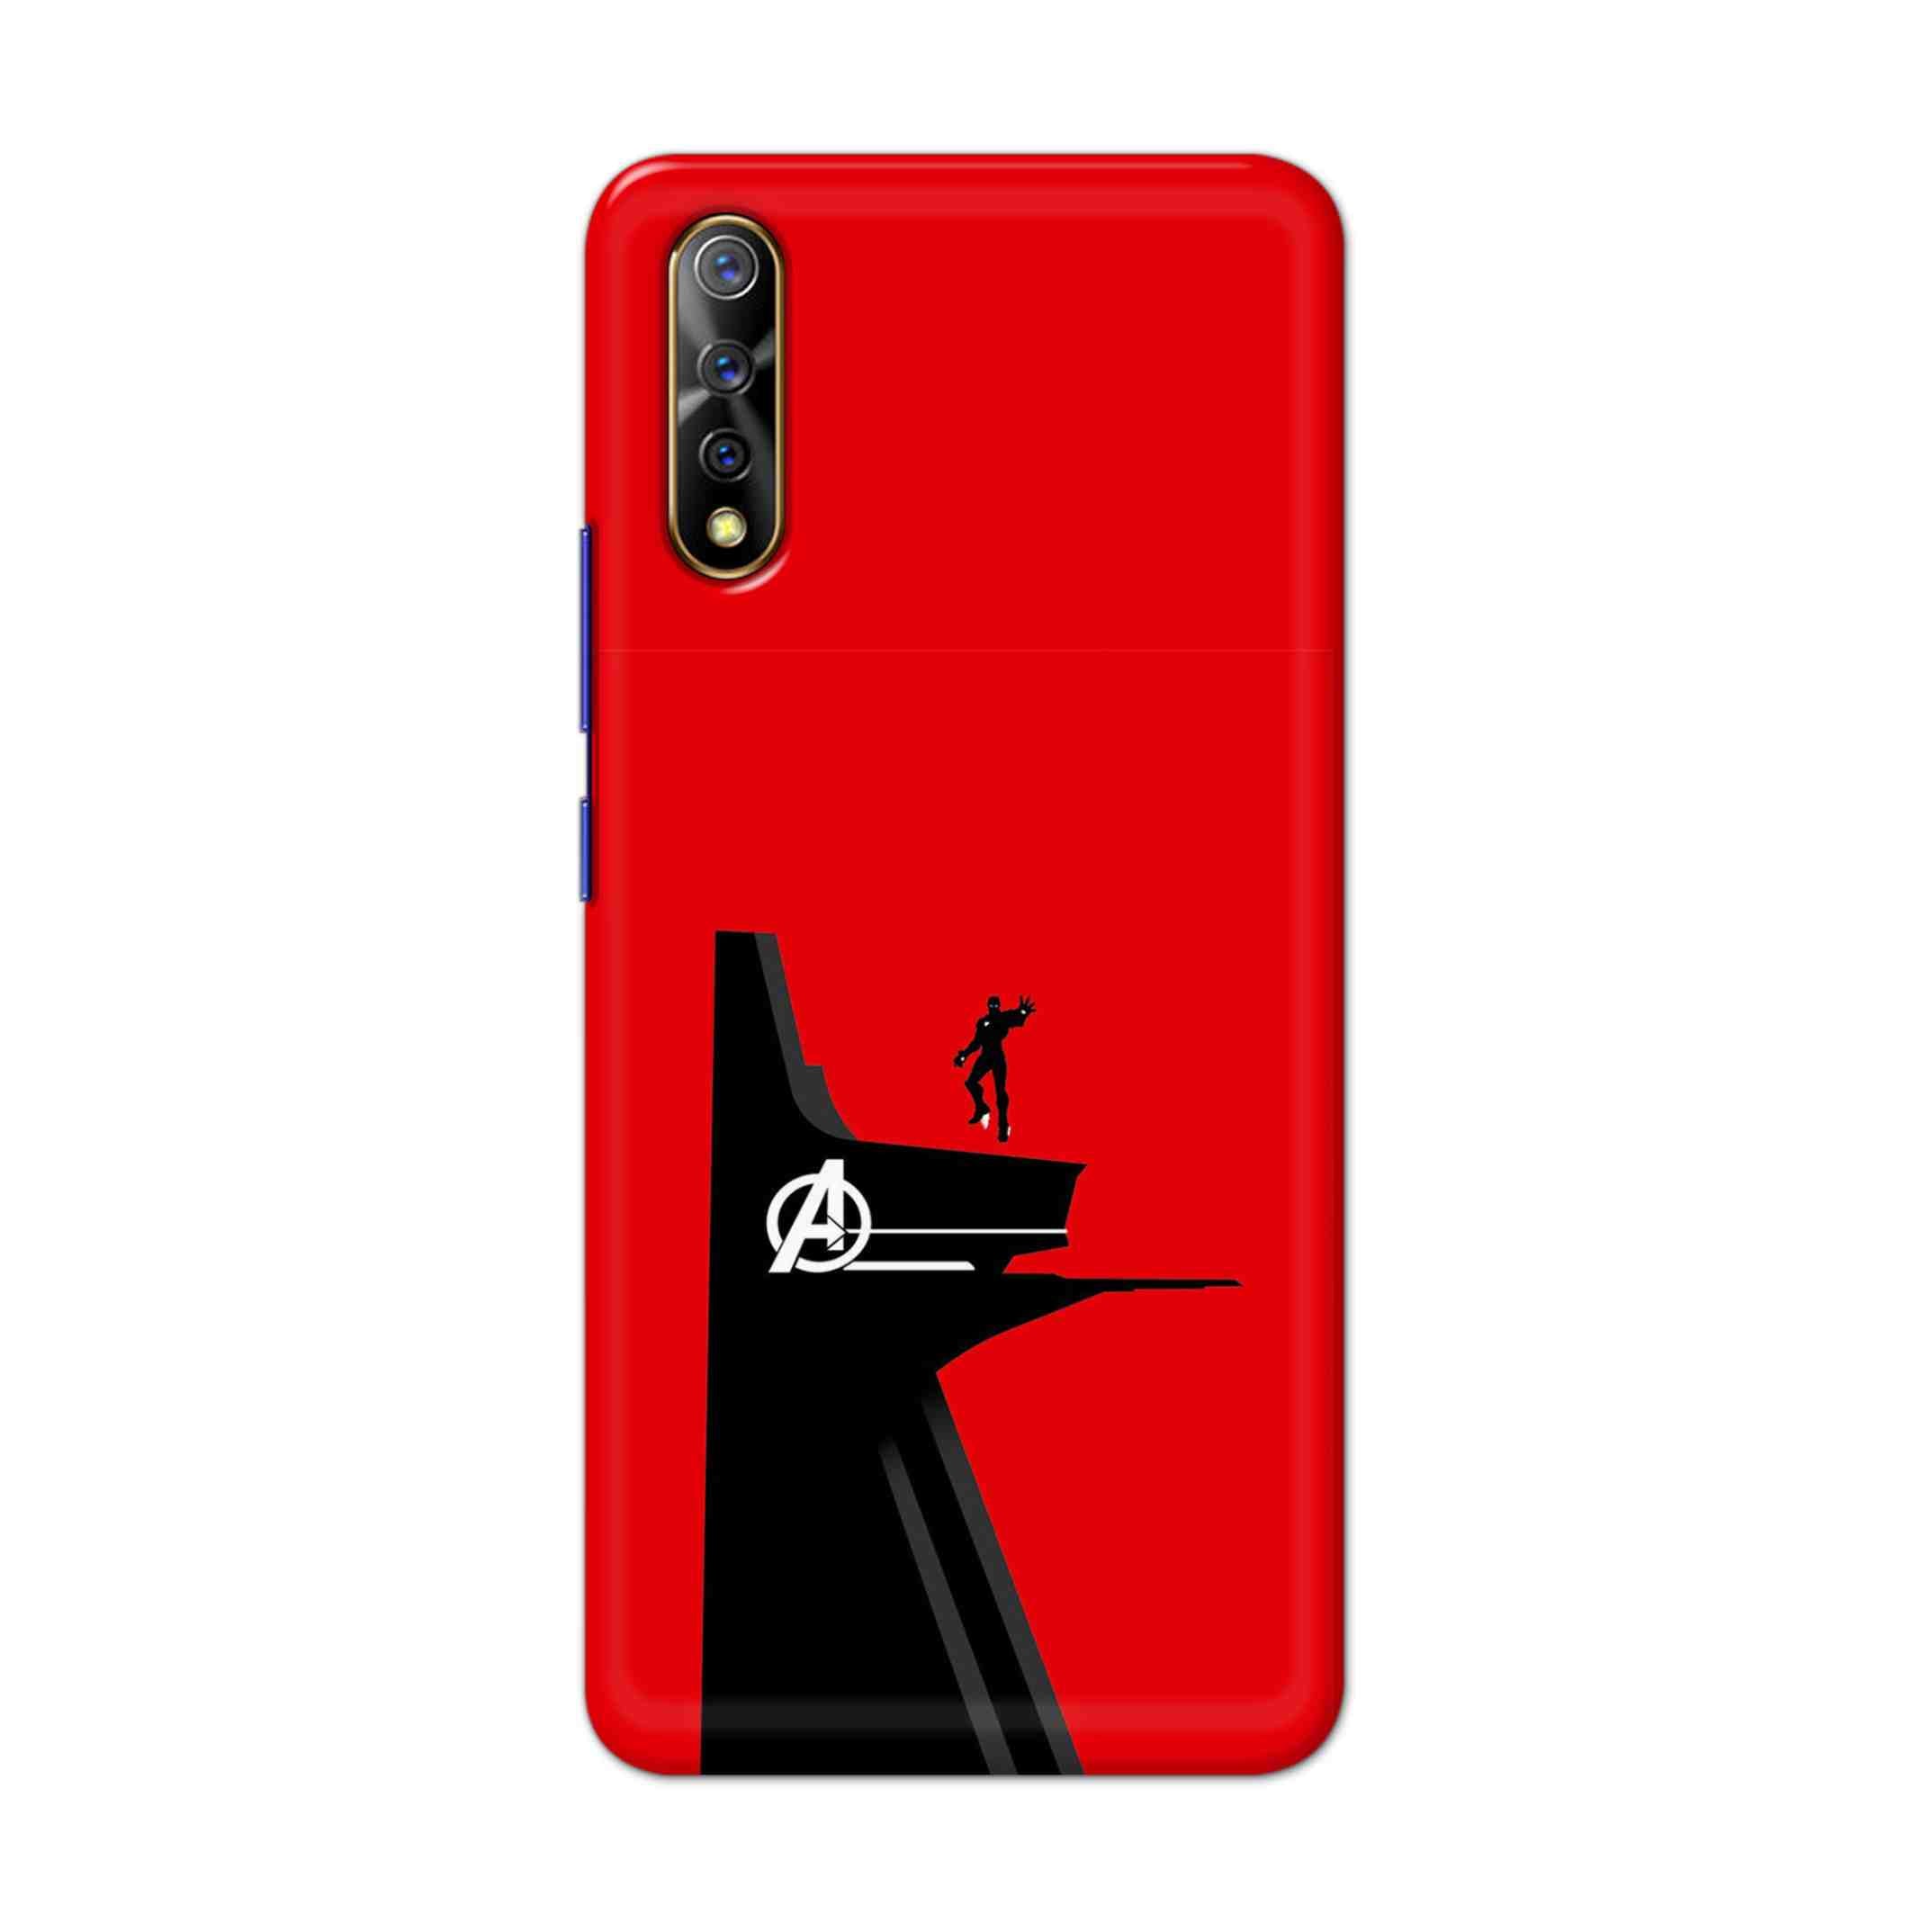 Buy Iron Man Hard Back Mobile Phone Case Cover For Vivo S1 / Z1x Online